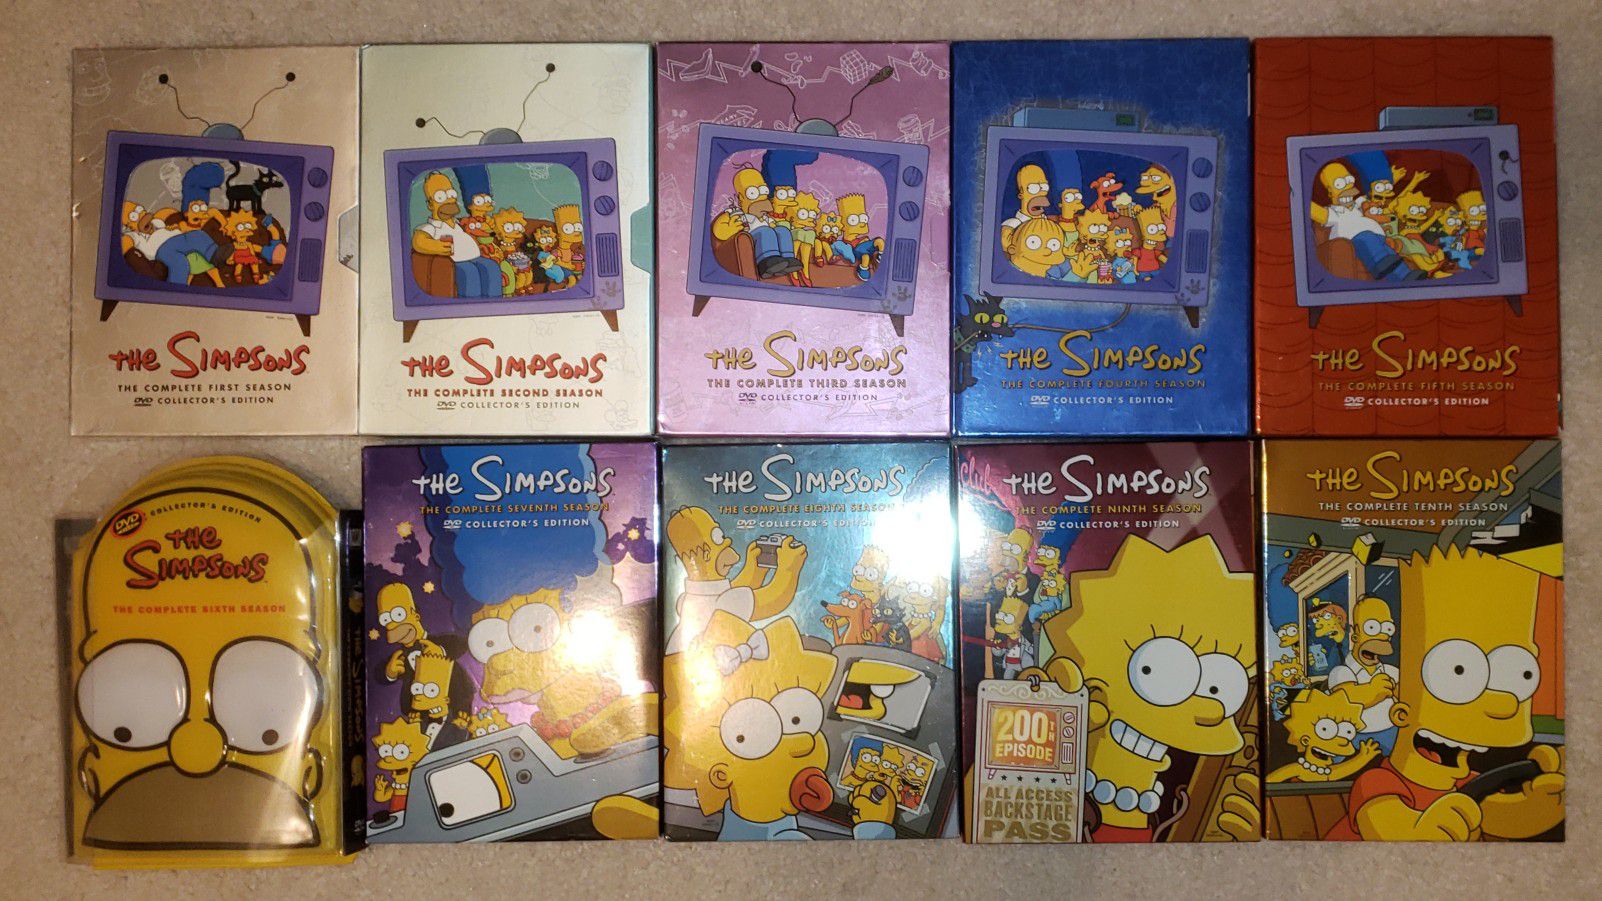 DVD - Simpsons season 1 to season 10